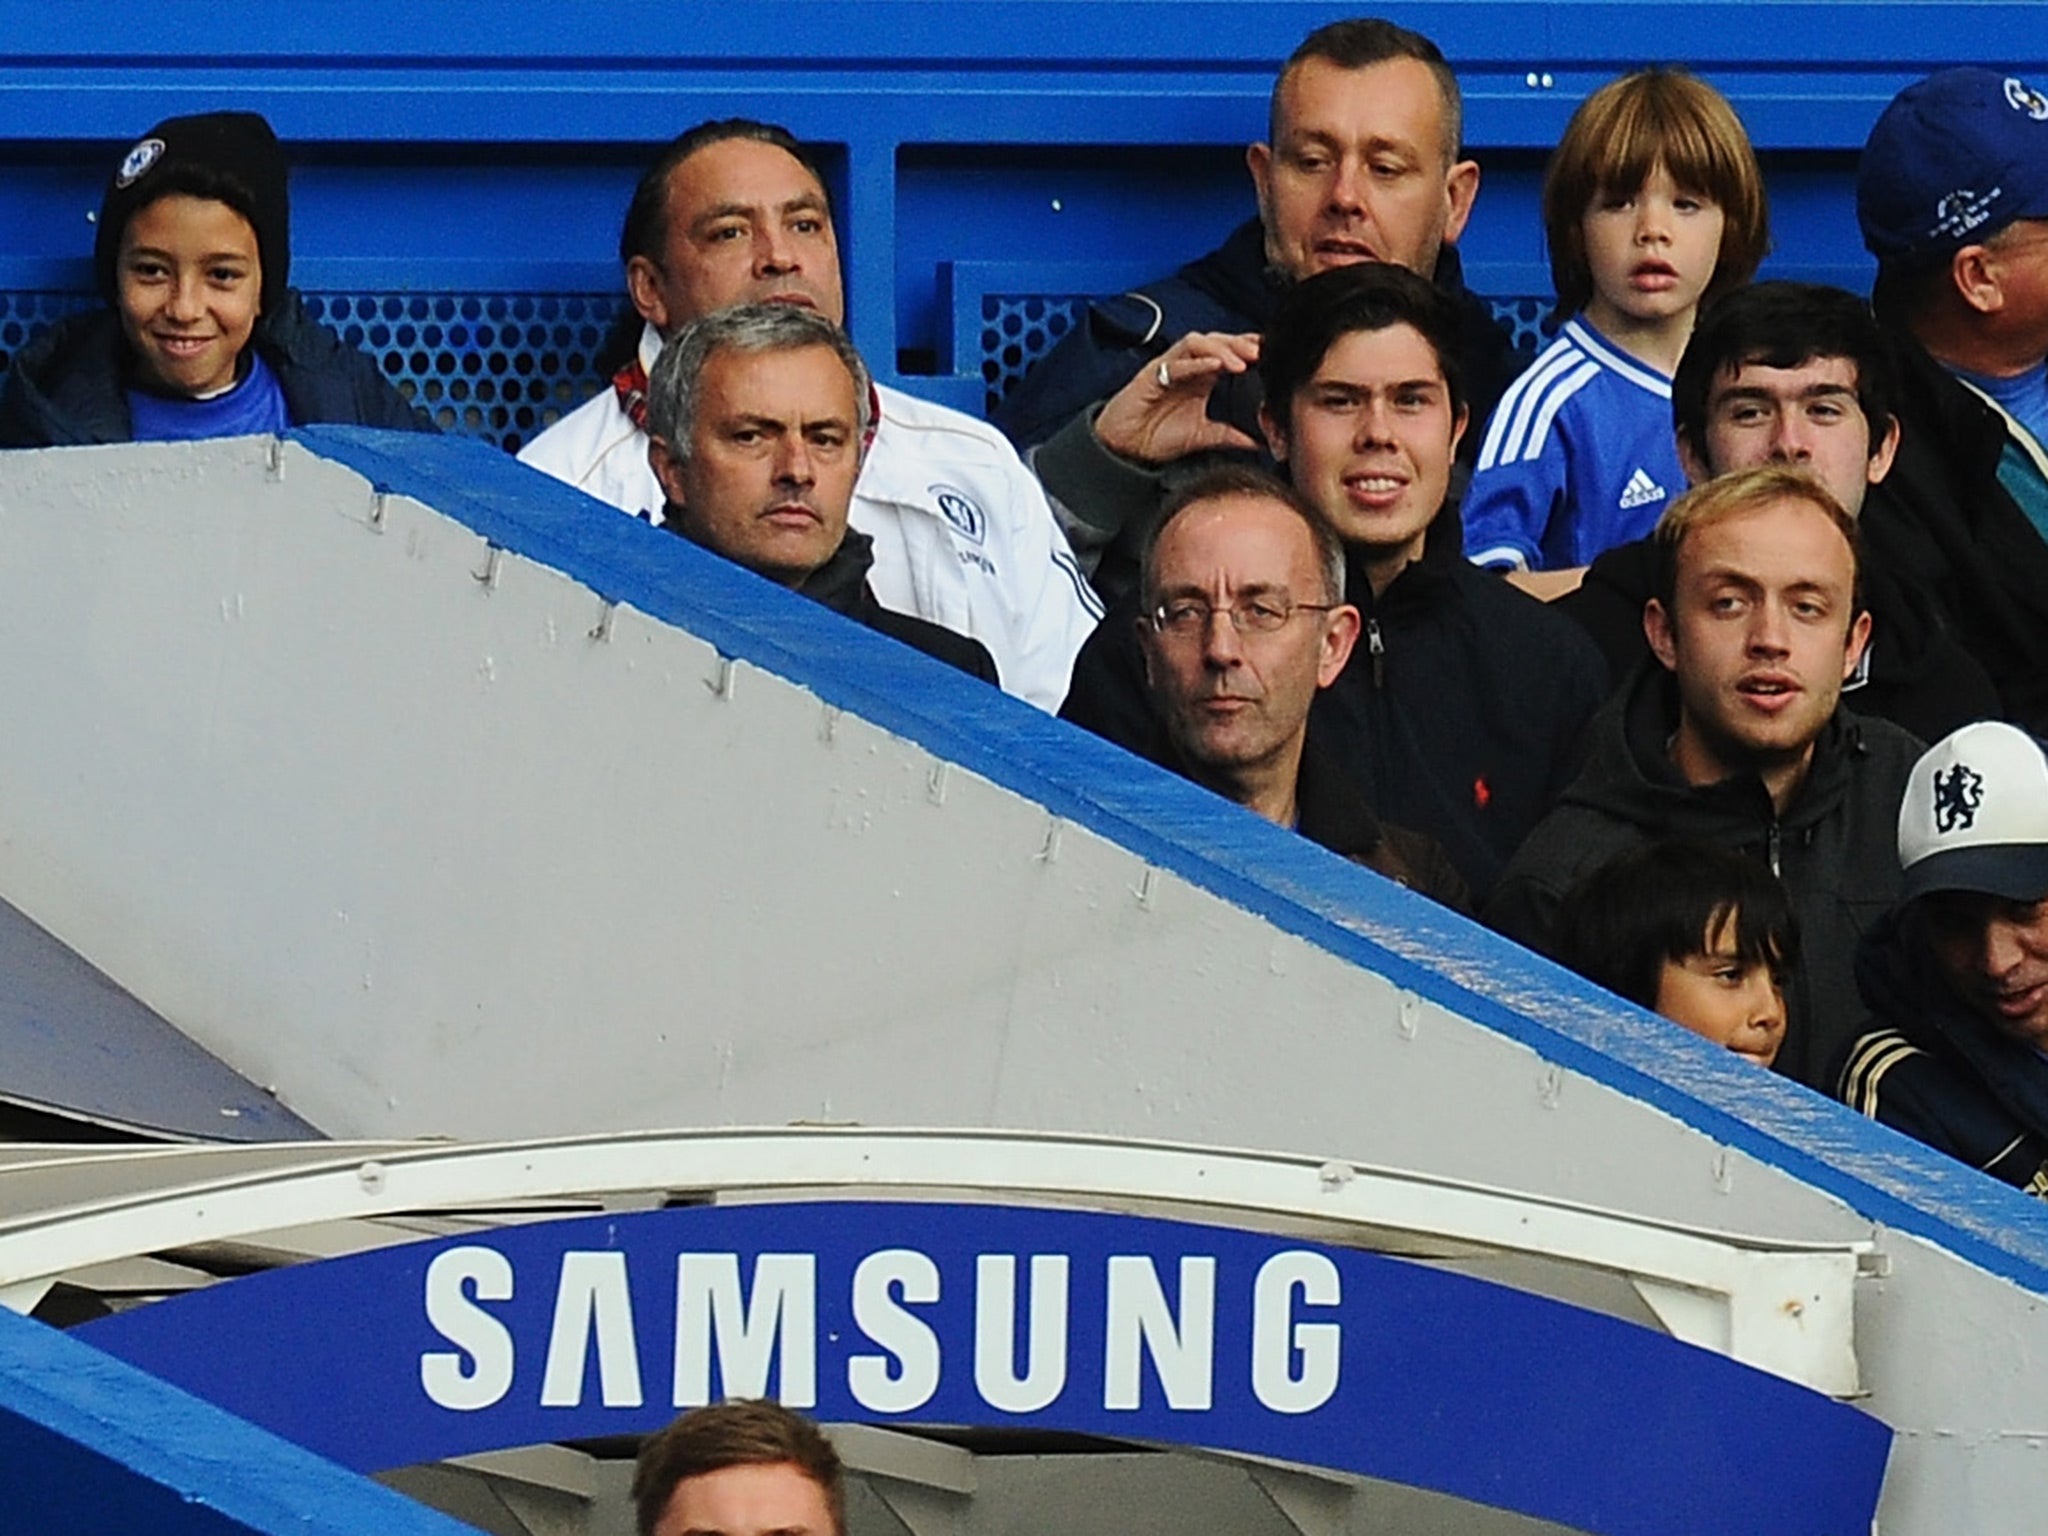 Jose Mourinho is no stranger to the stands